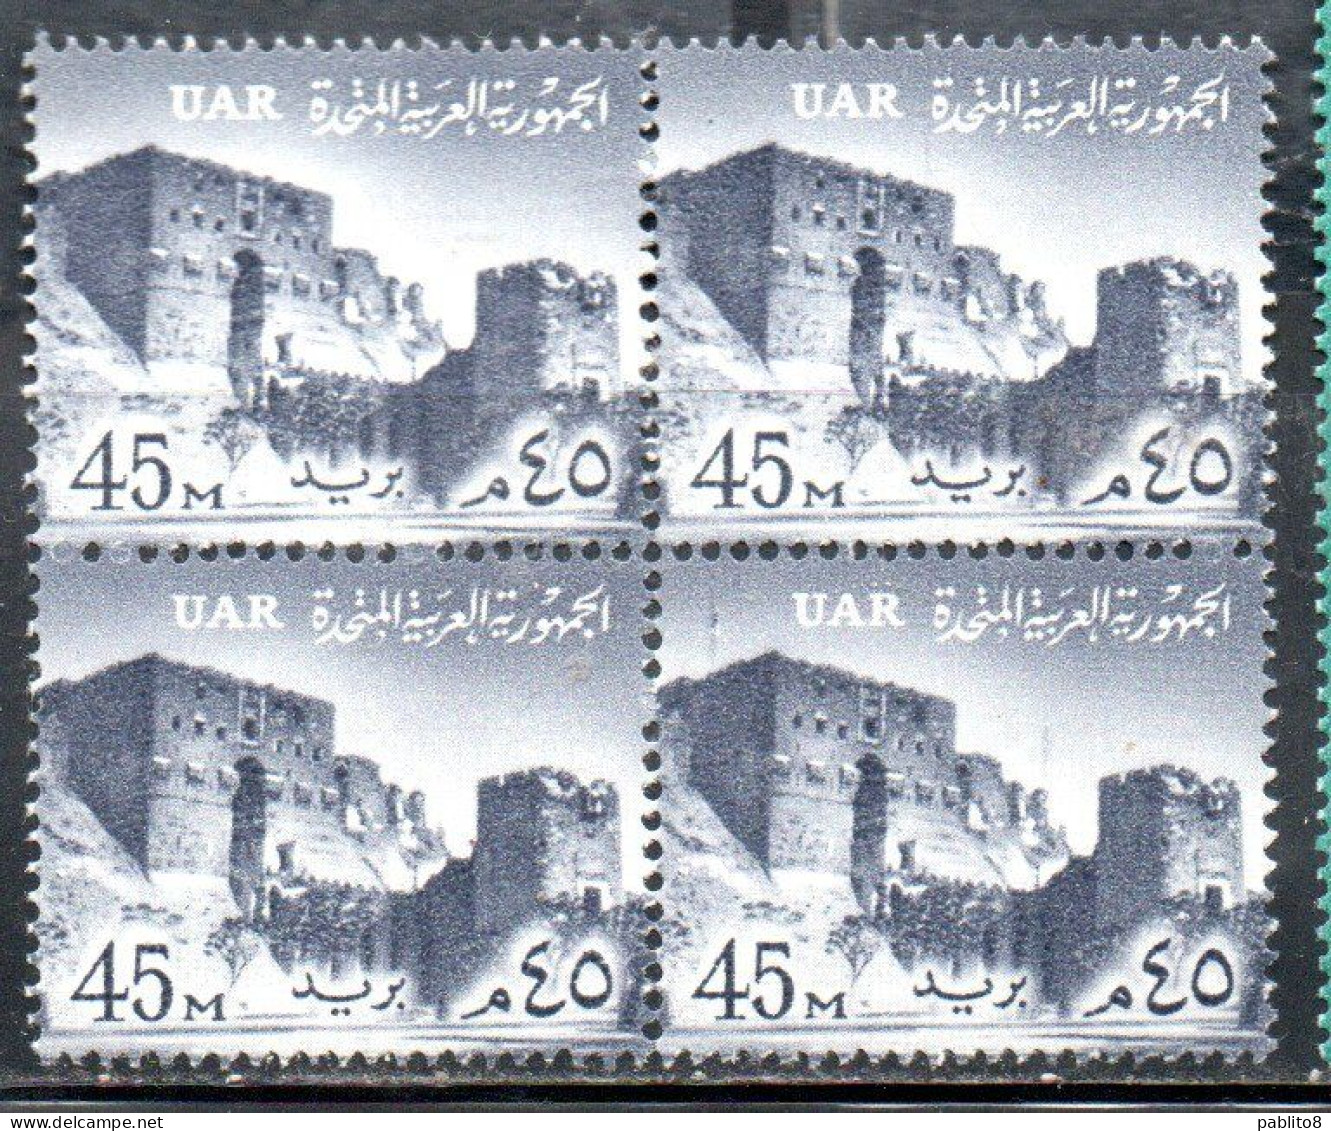 UAR EGYPT EGITTO 1959 1960 SALADIN'S CITADEL ALEPPO 45m MNH - Unused Stamps